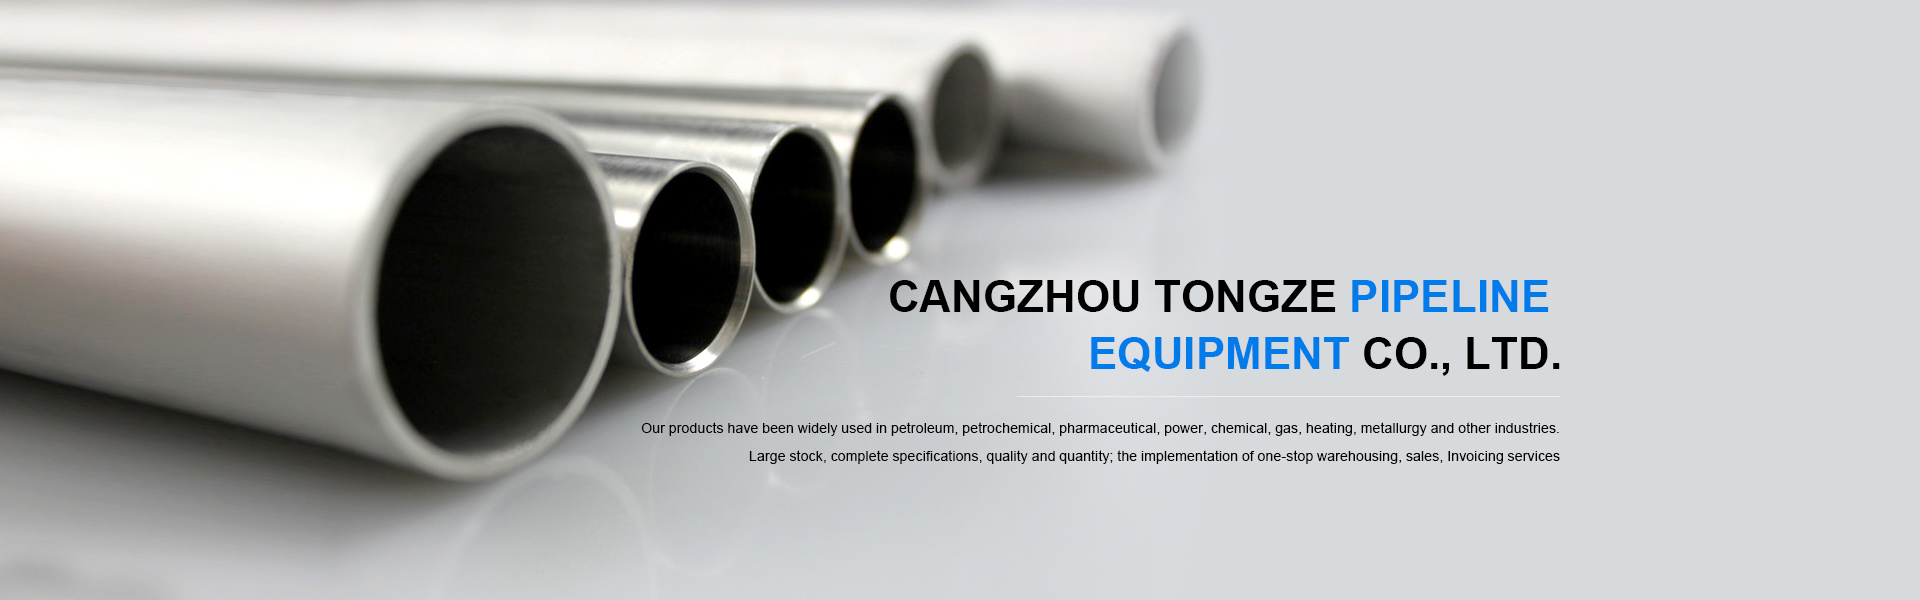 Cangzhou Tongze Pipeline Equipment Co., Ltd.